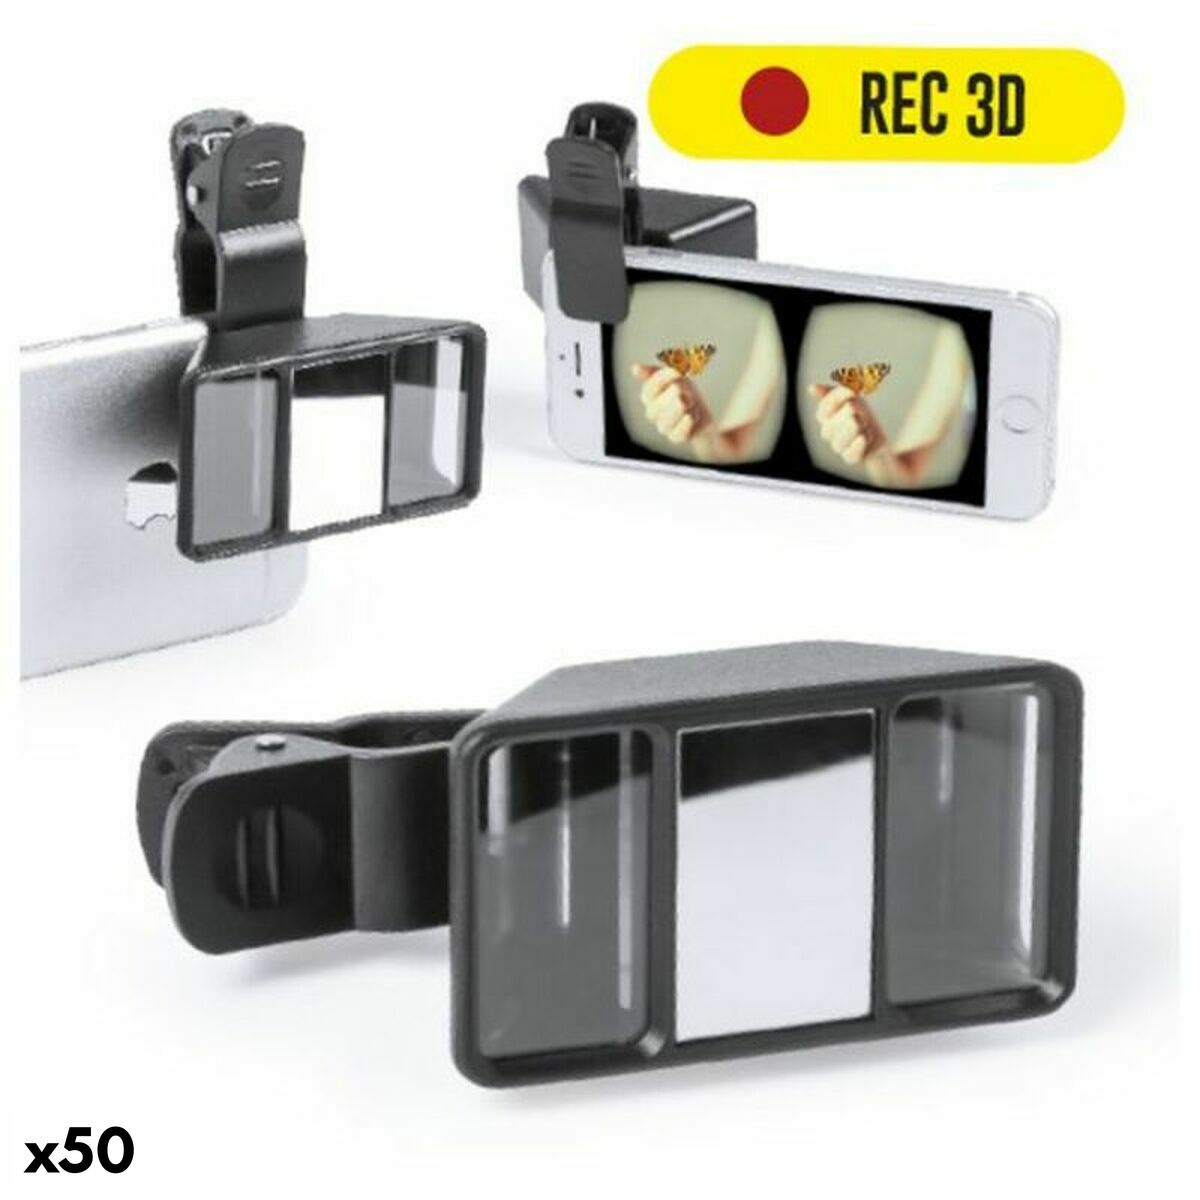 3D Lens for Smartphone Camera 145633 (50 Units)